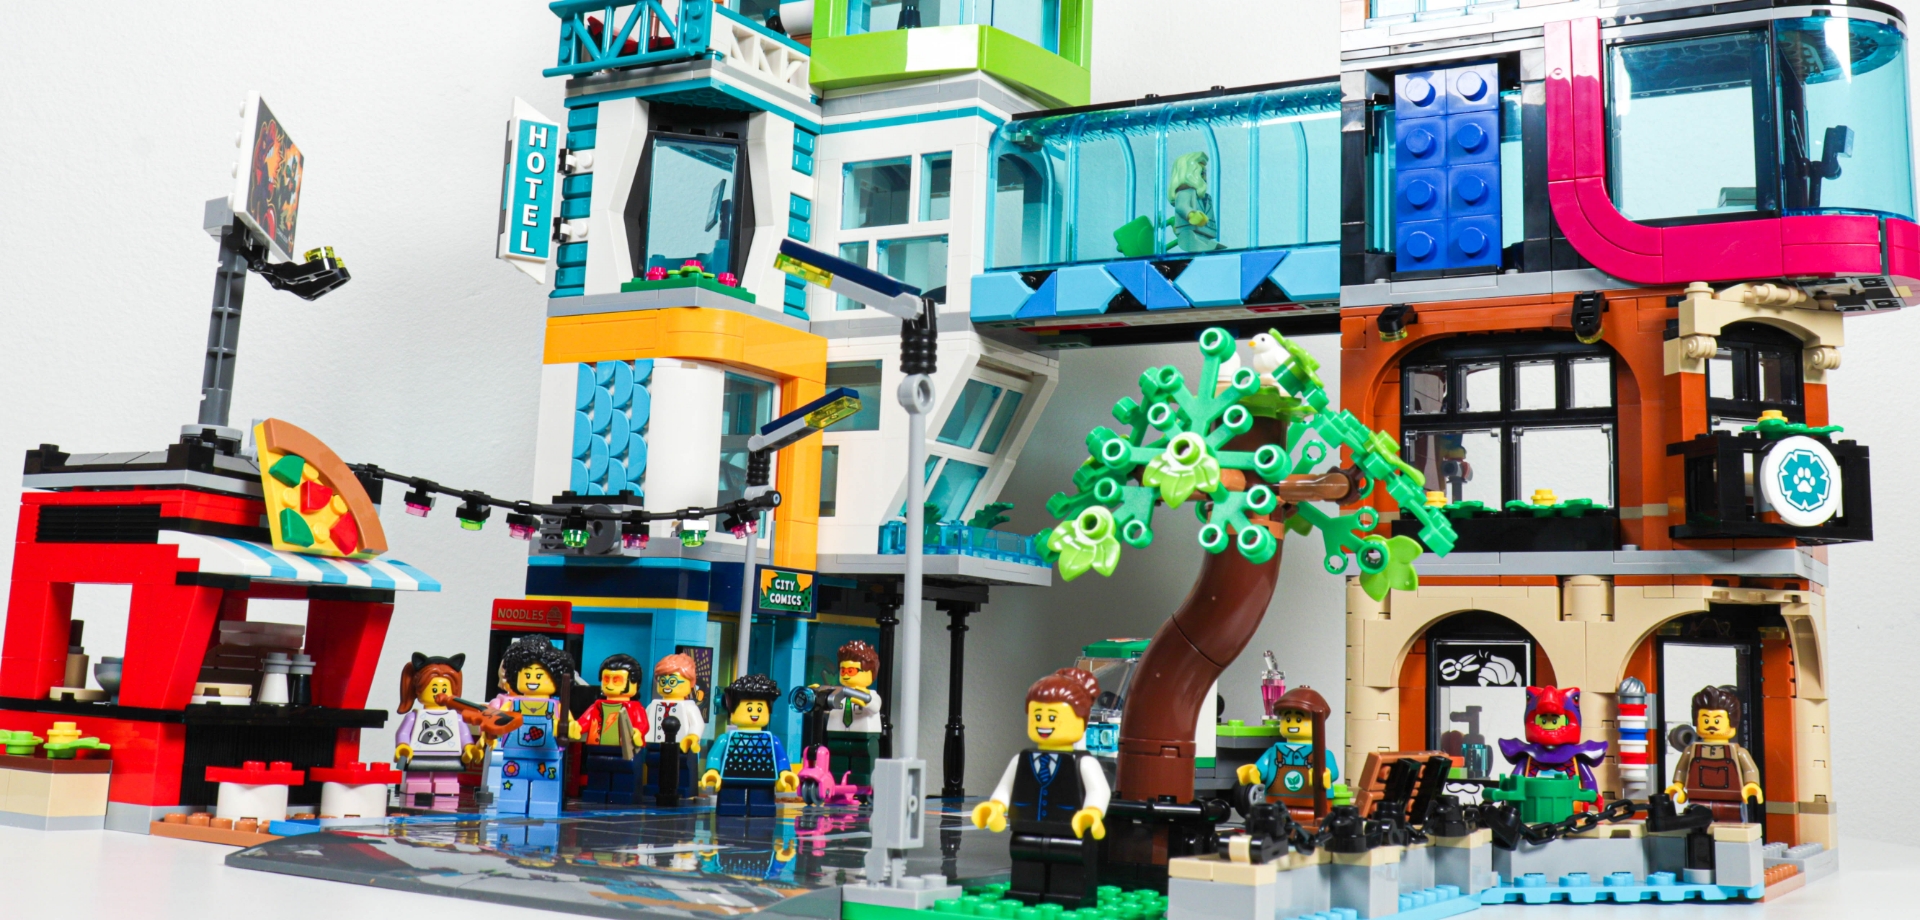 5-6 Years, Lego city